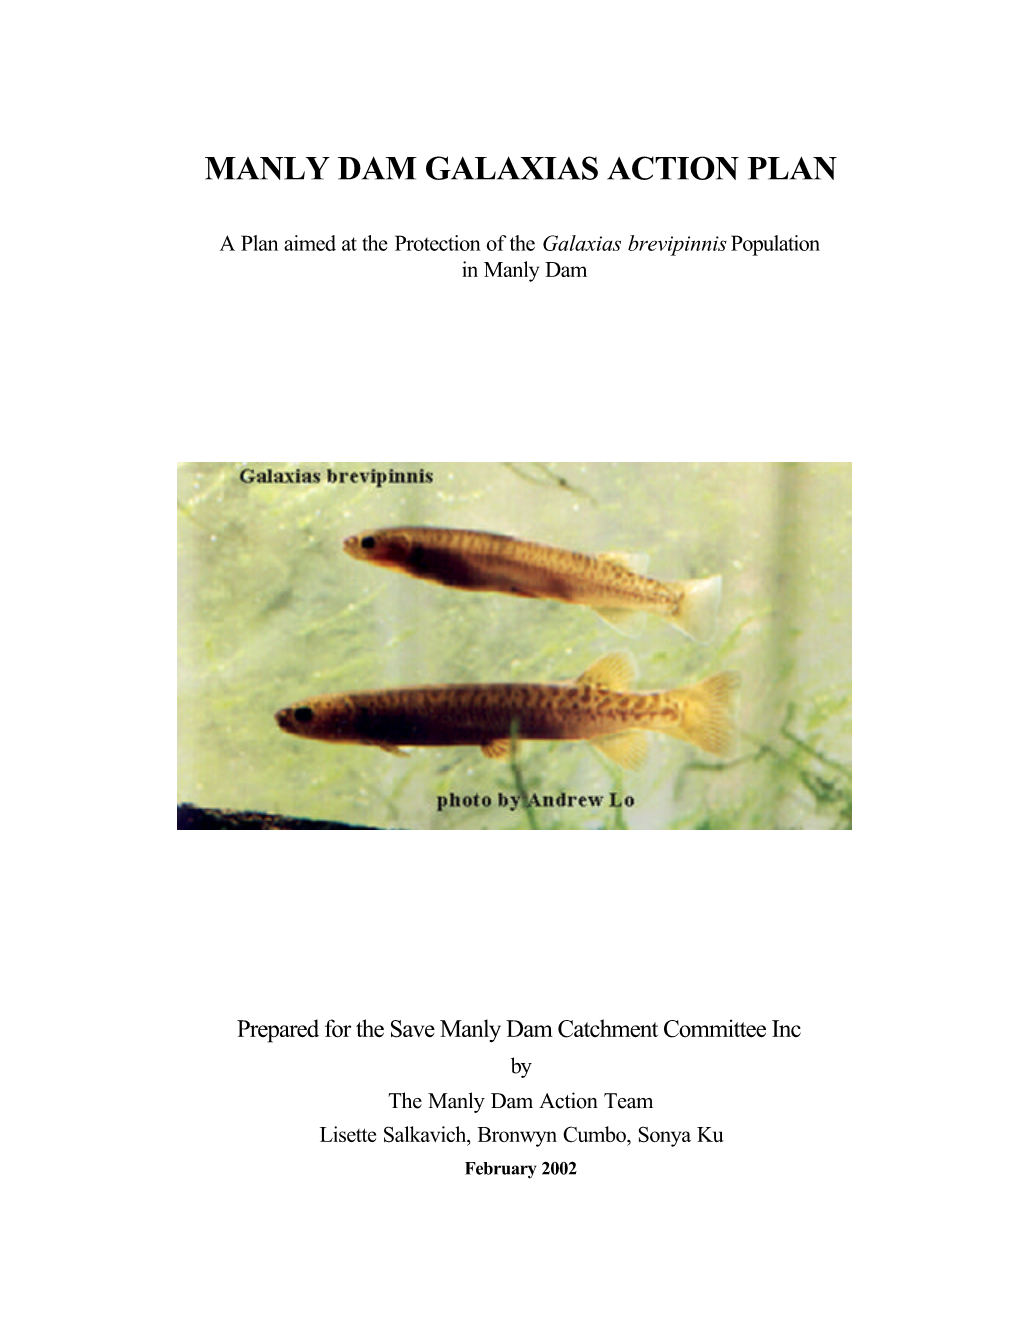 Manly Dam Galaxias Action Plan